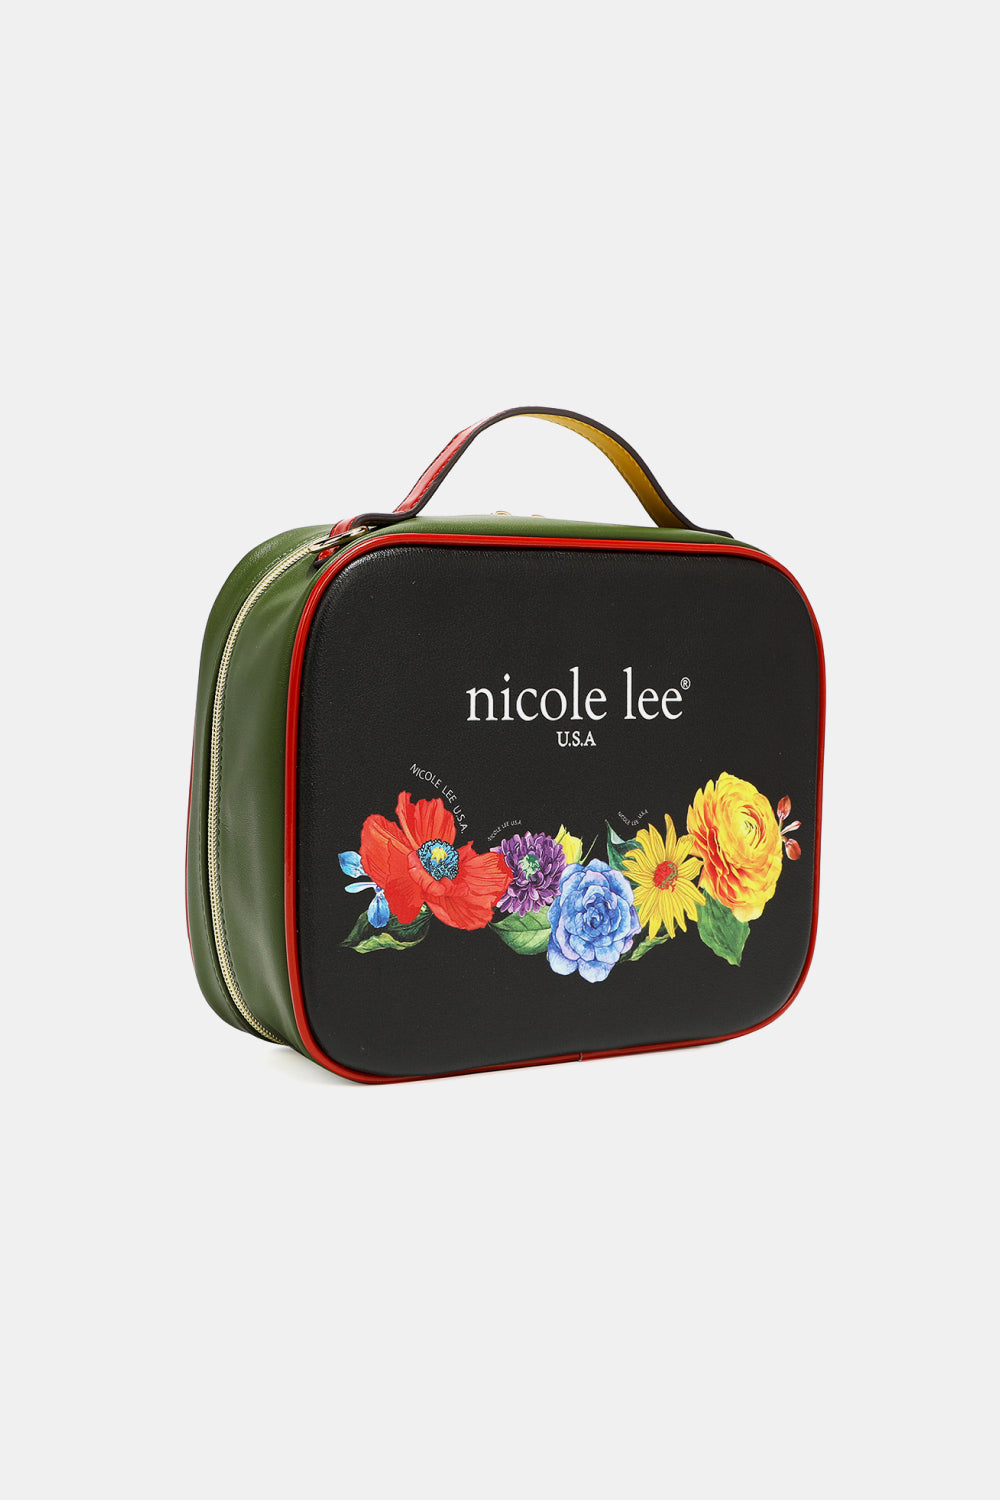 Nicole Lee USA Printed Handbag with Three Pouches - Alonna's Legging Land